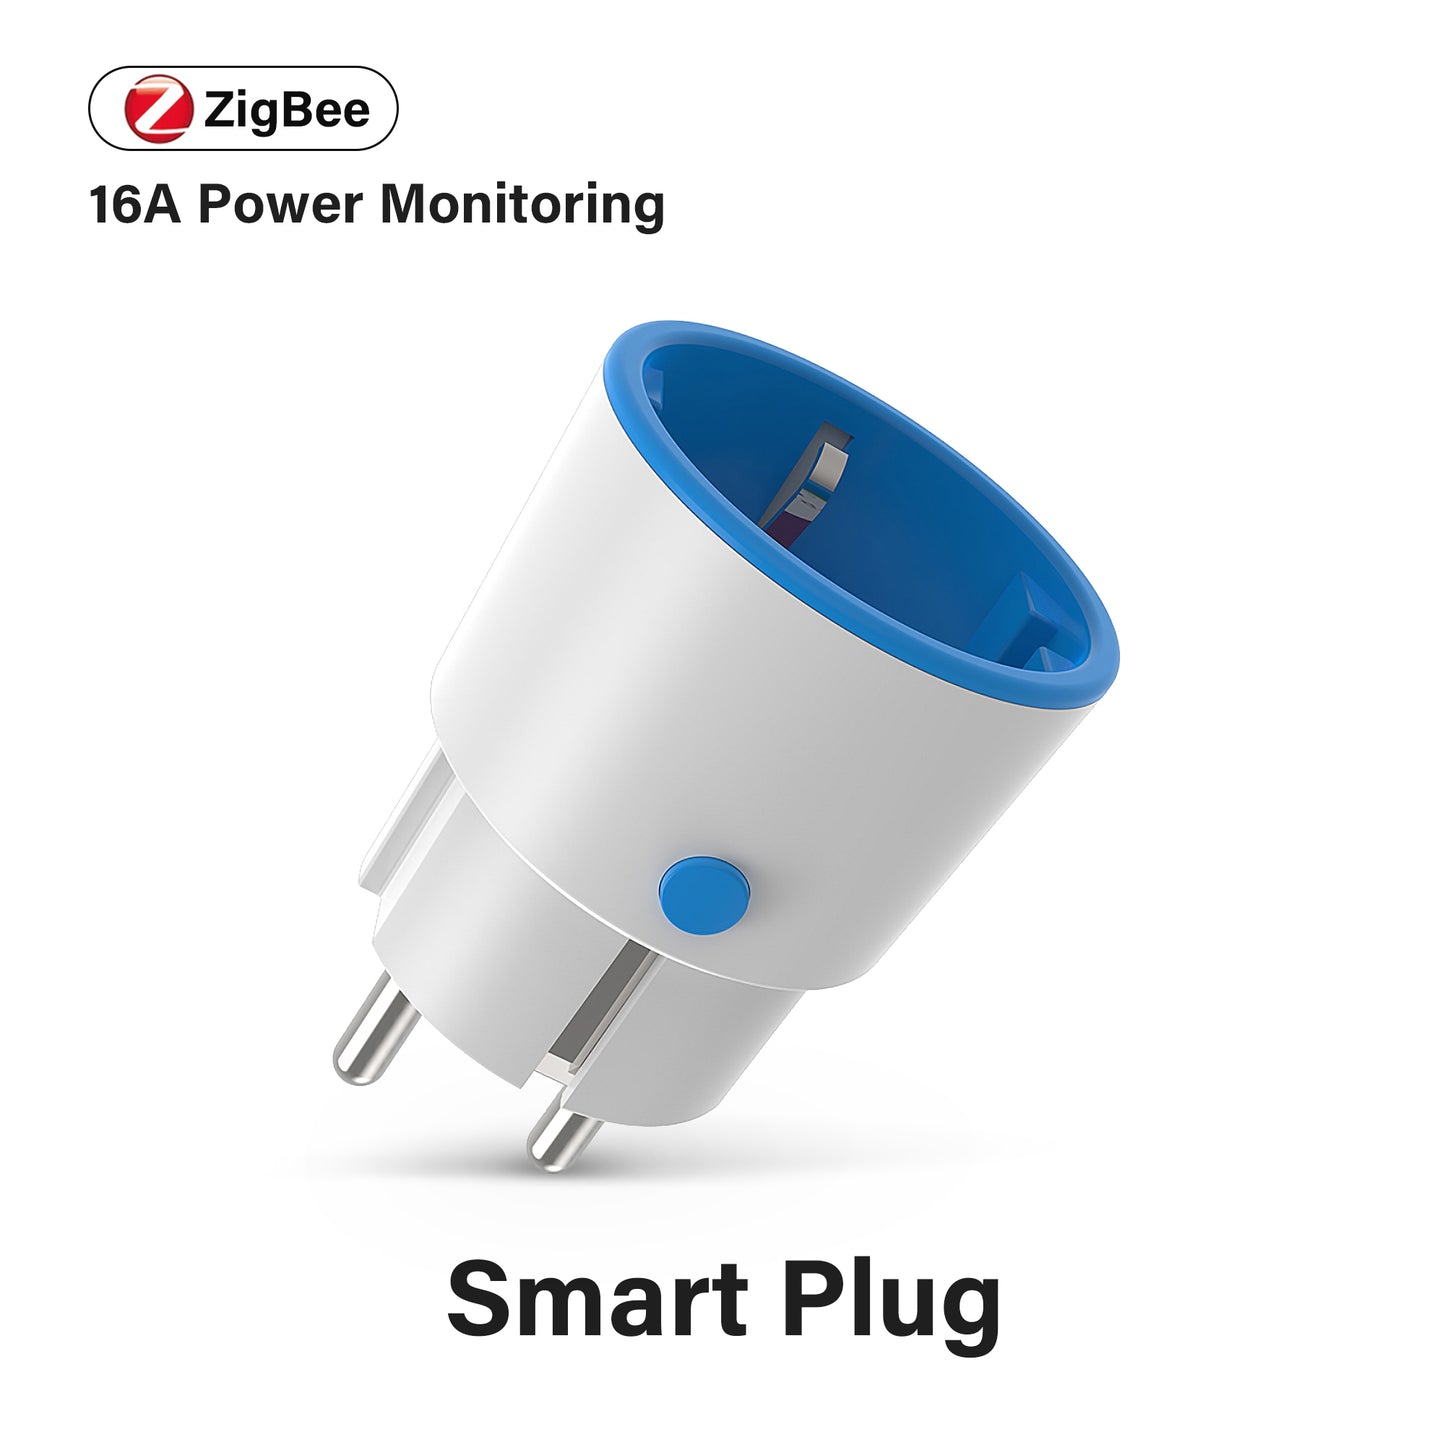 Moes Zigbee Tuya Socket Power Plug 13a Smart App Wireless Socket